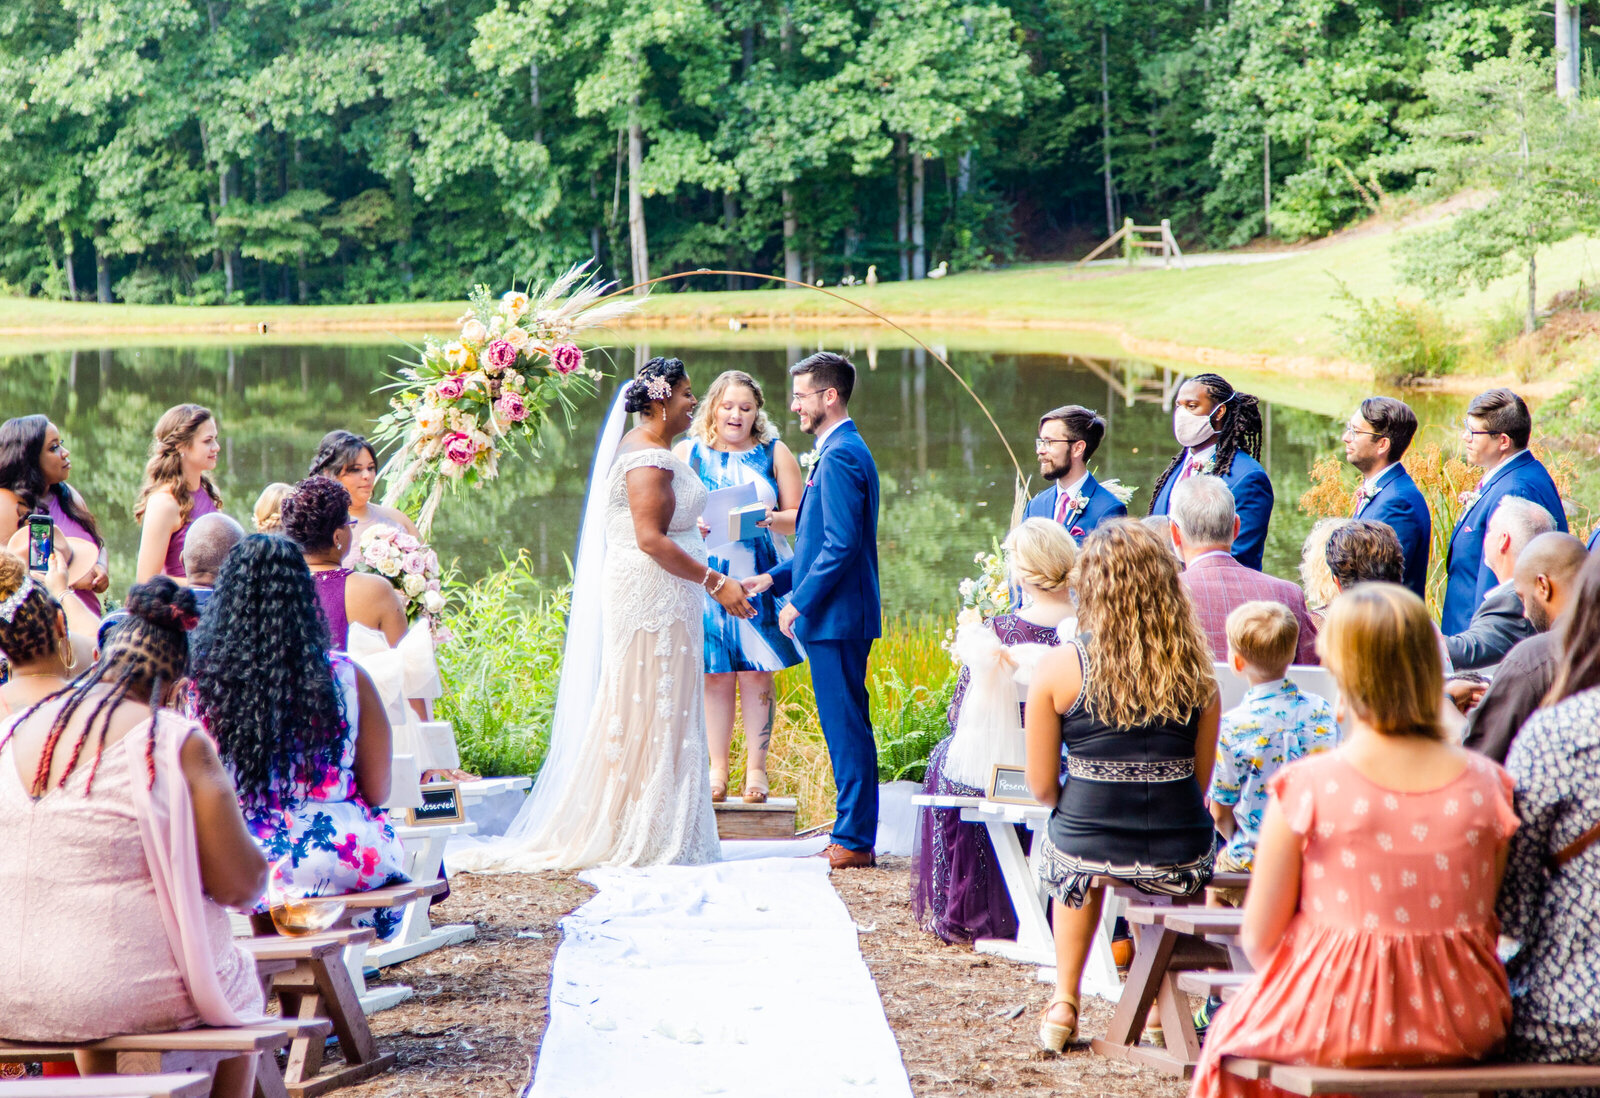 outdoor wedding ceremony near a pond